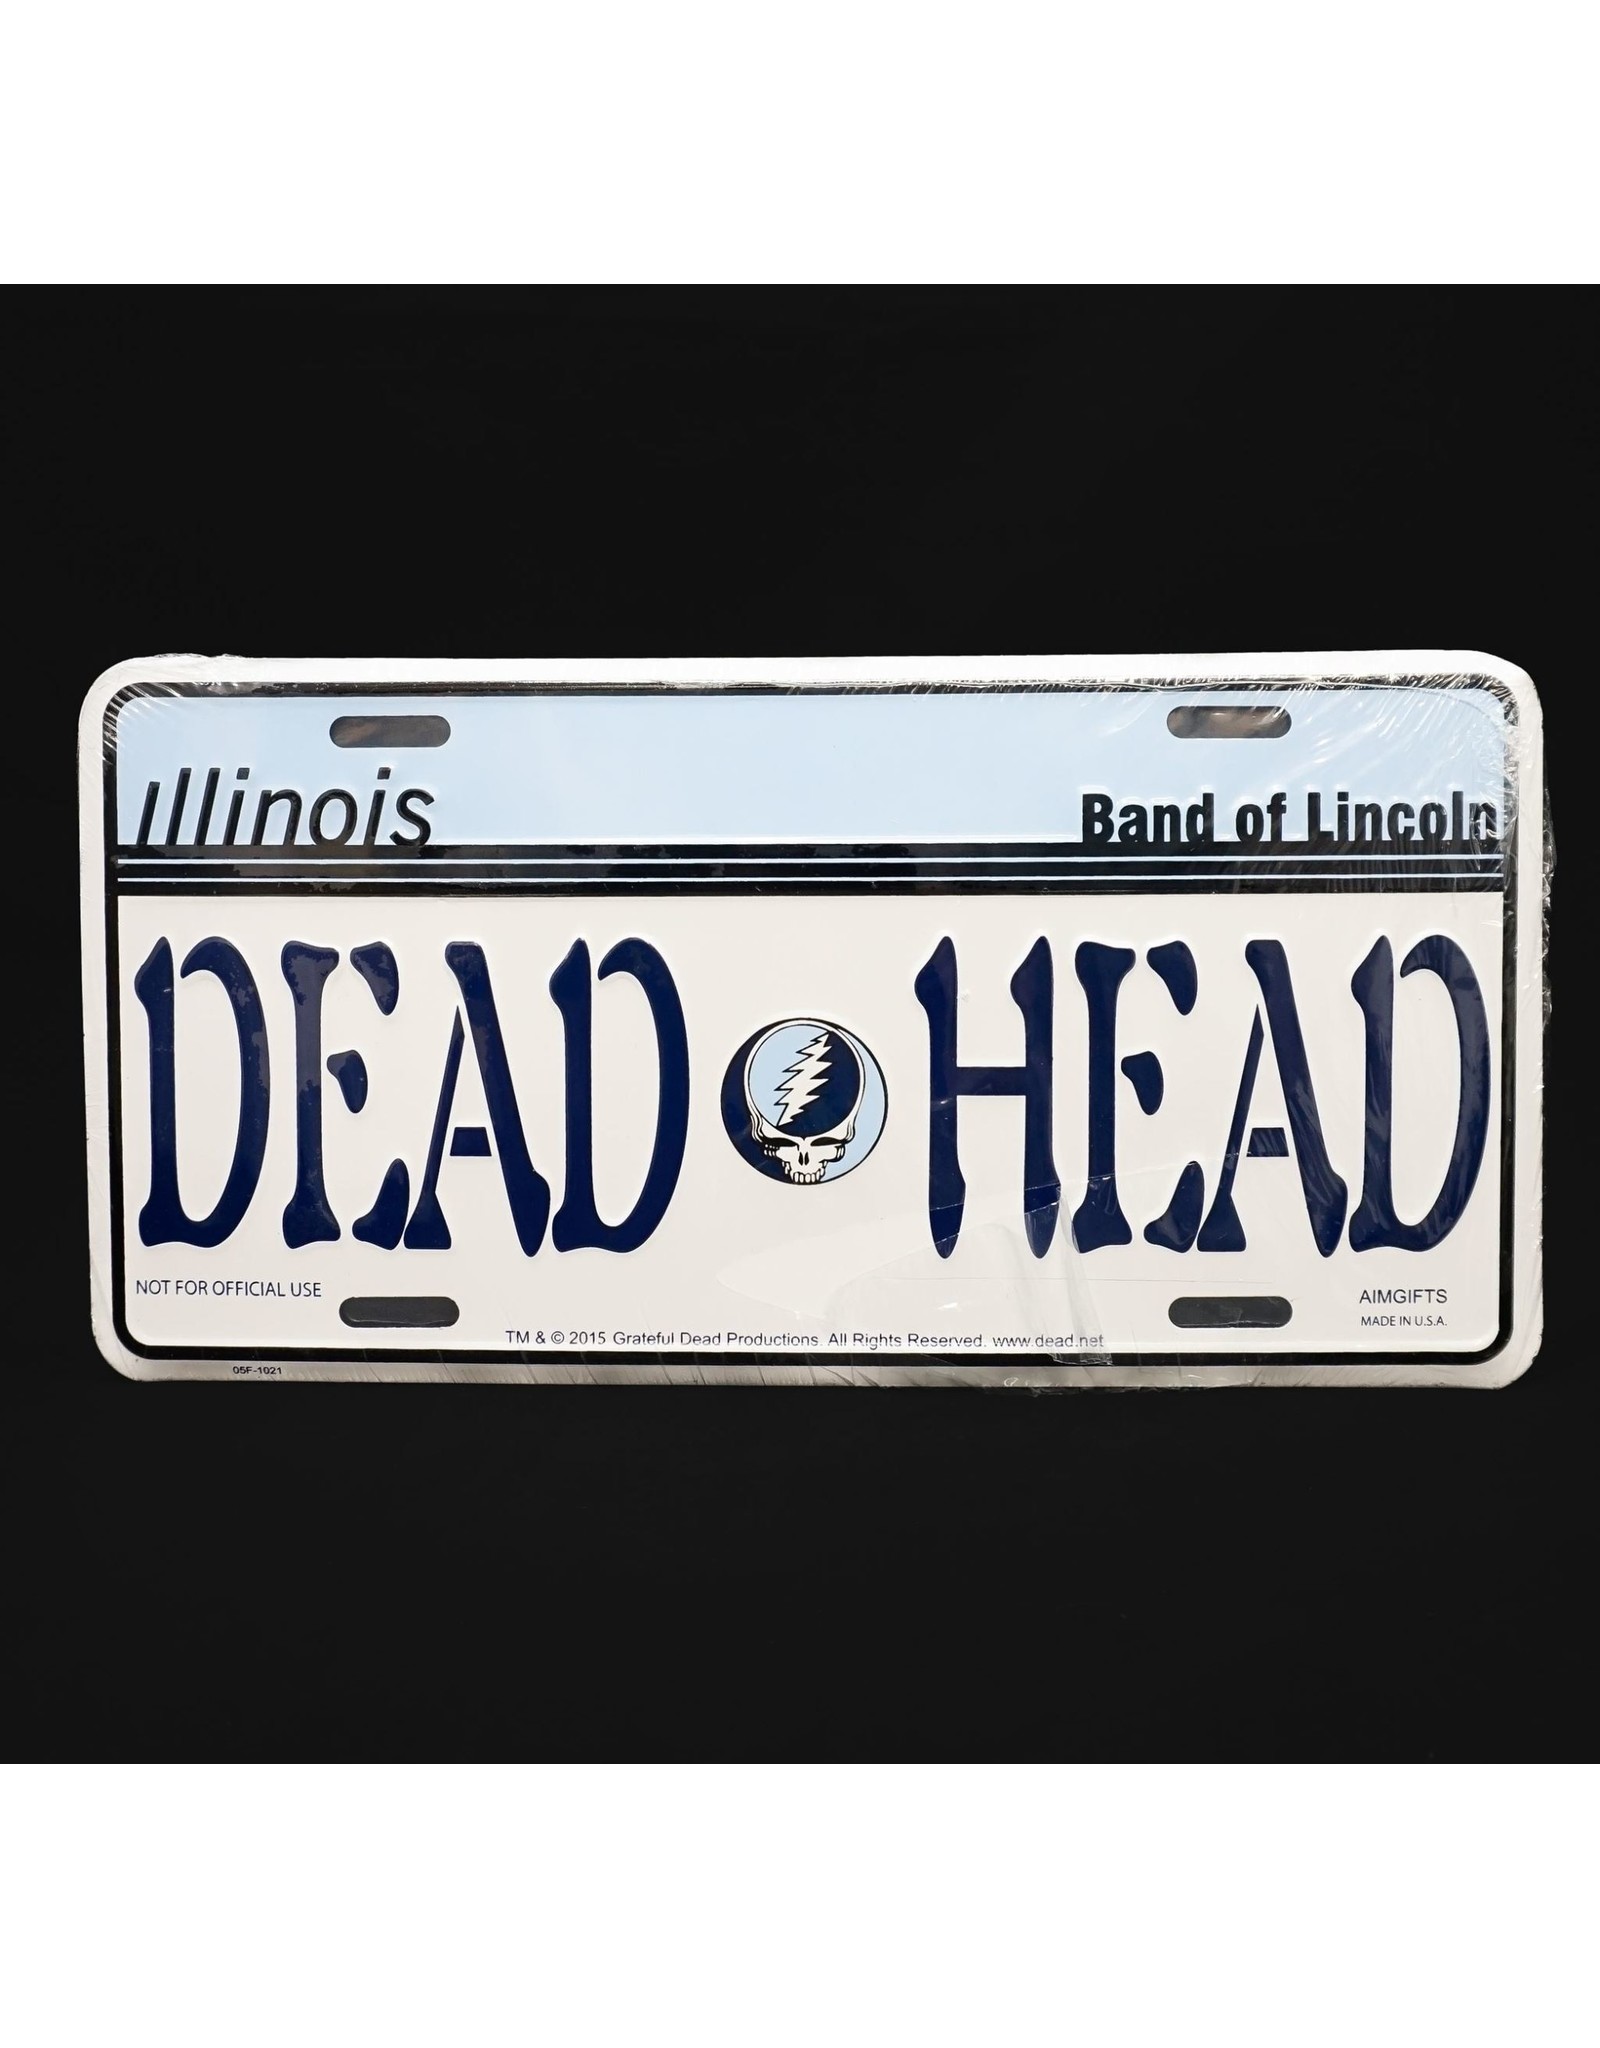 License Plate - Illinois Dead Head